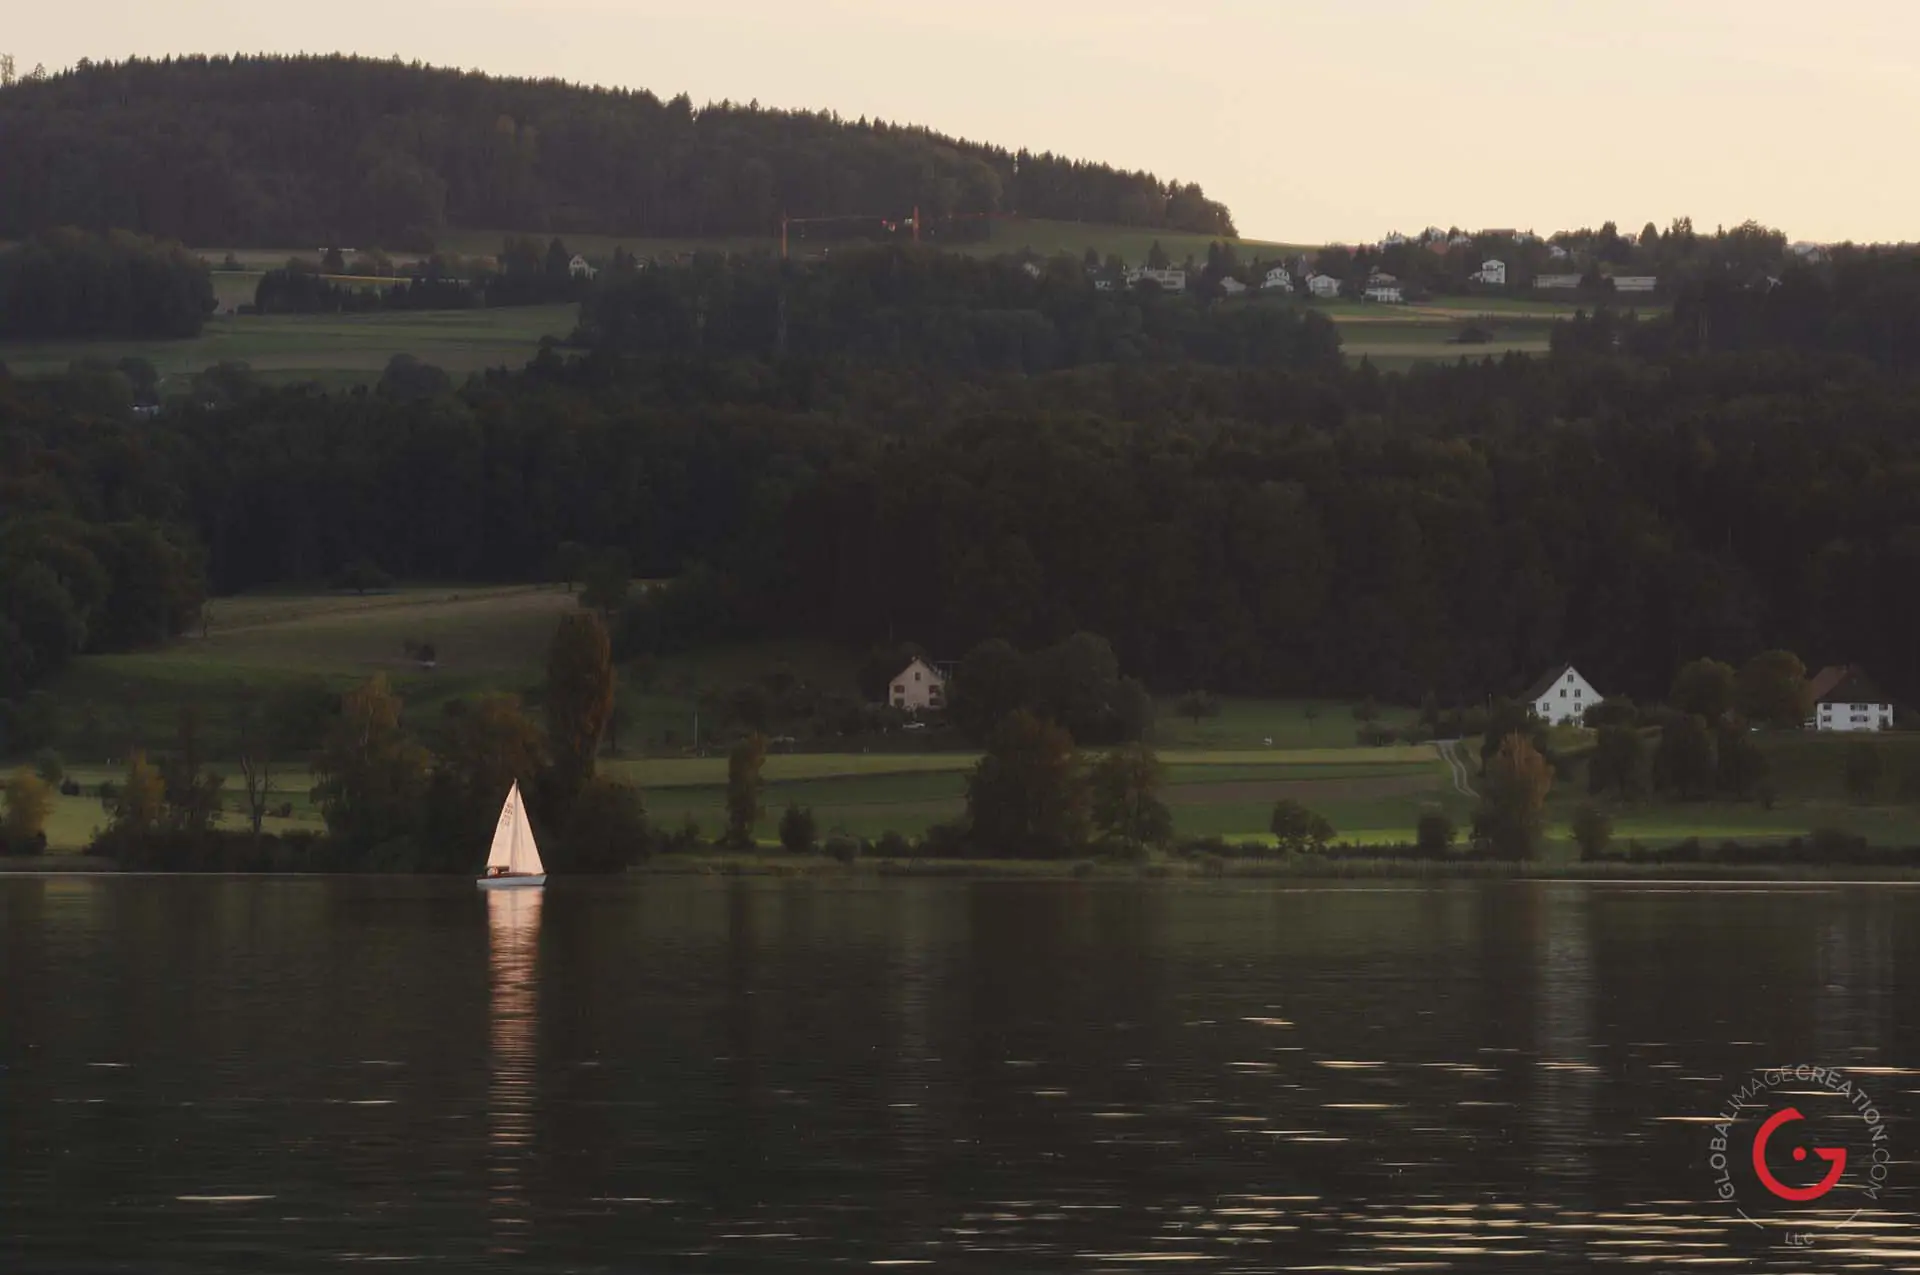 Lone Sailboat on the Lake - Travel Photographer and Switzerland Photography